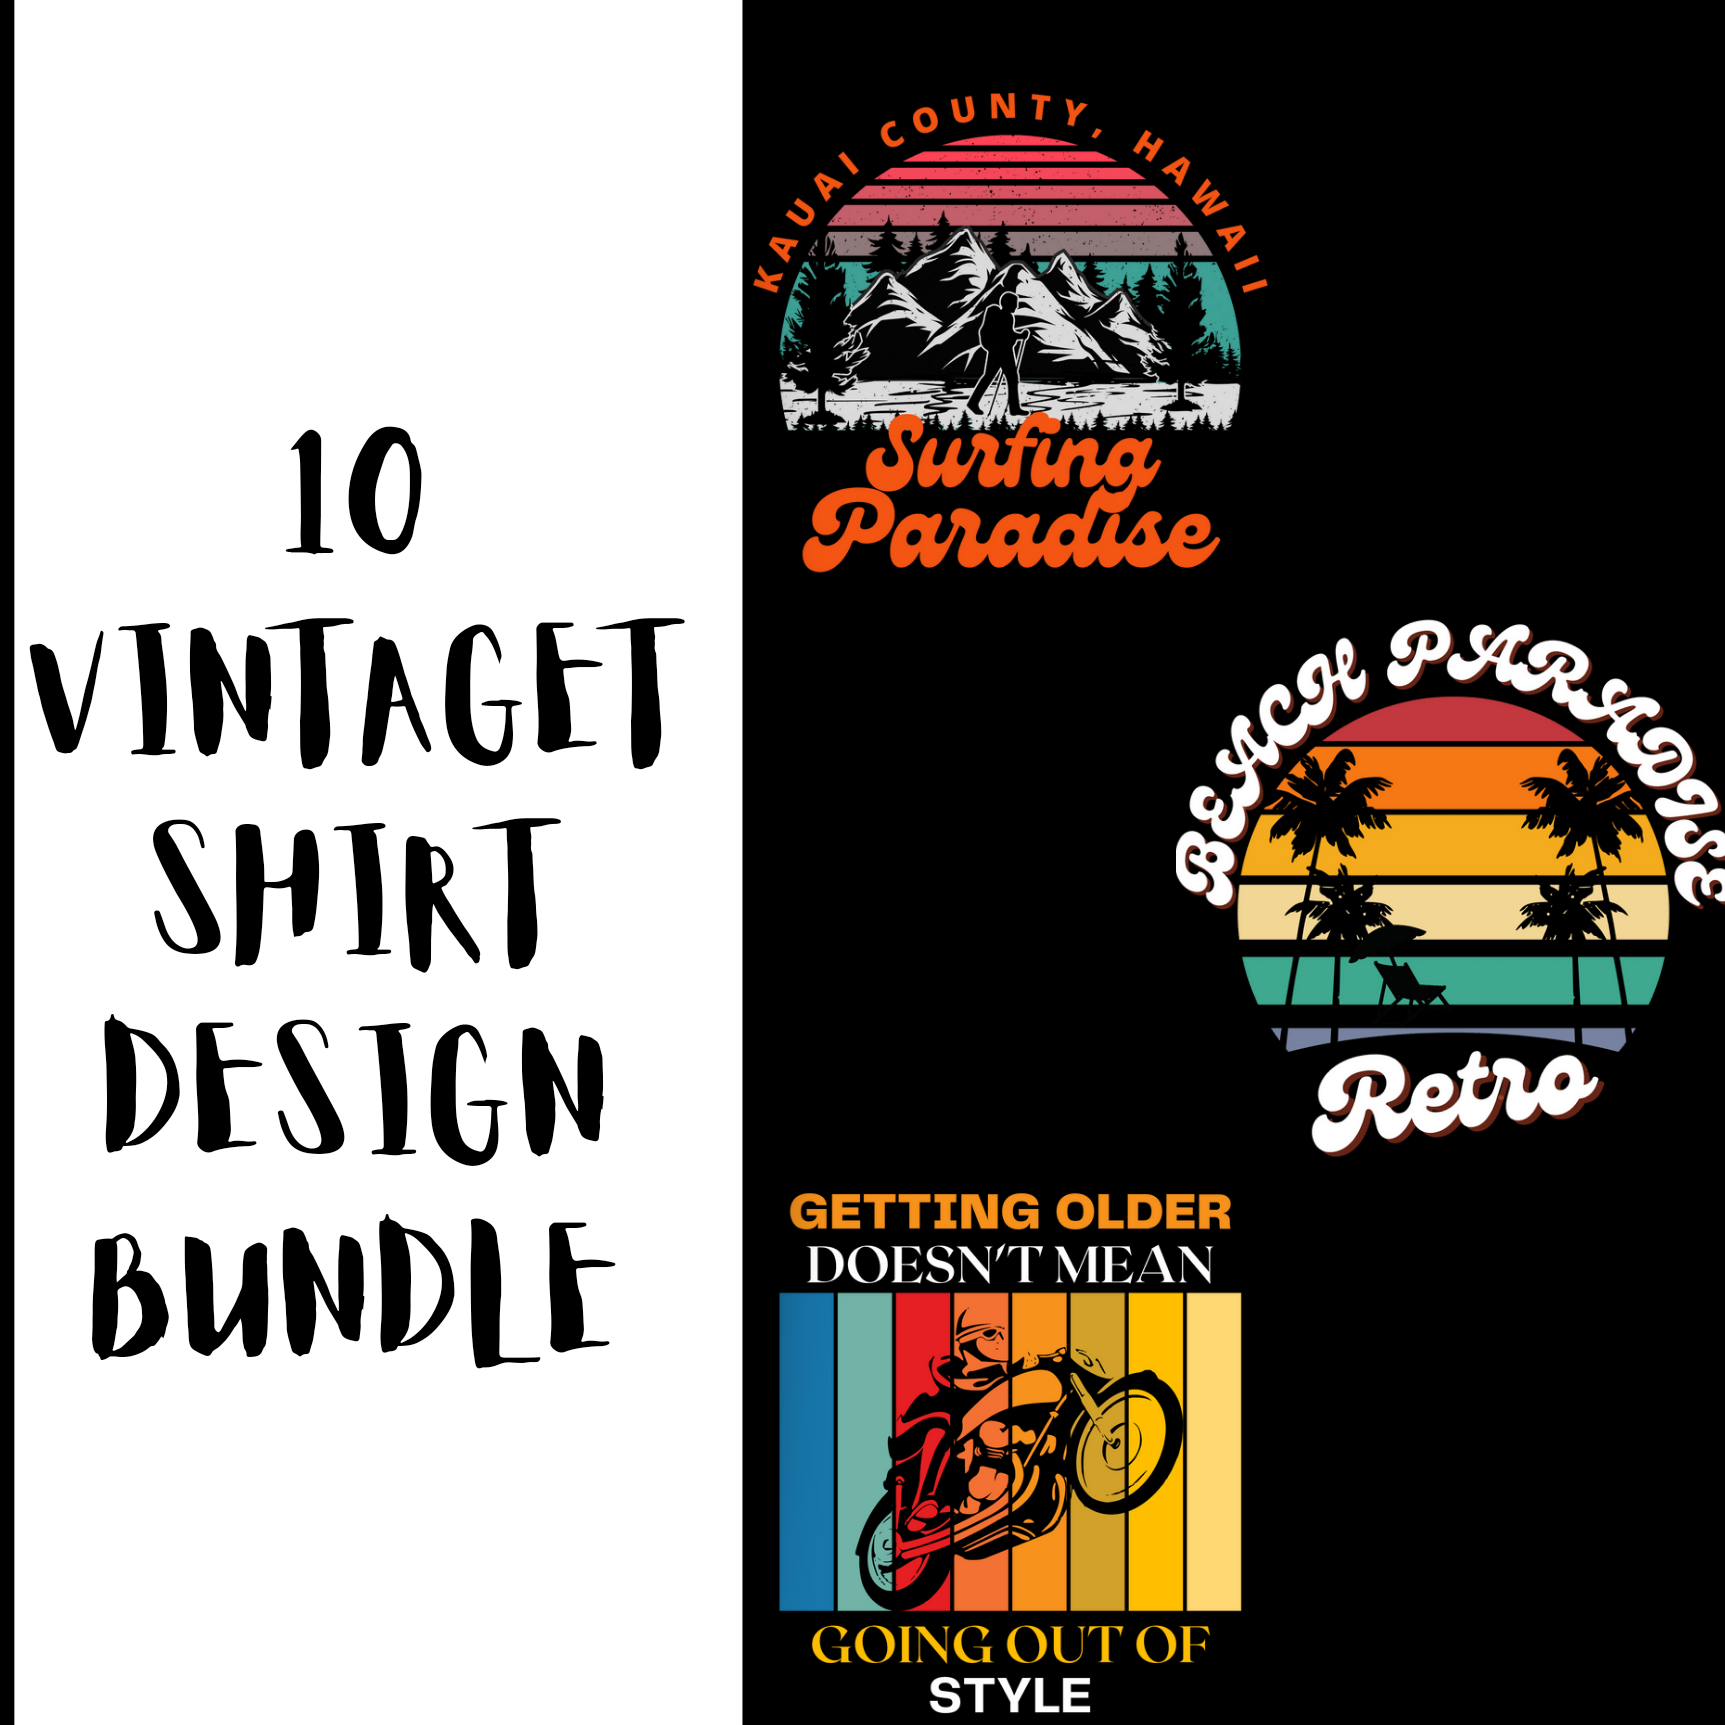 10 Vintage Tshirt Design Bundle Collection pinterest image.